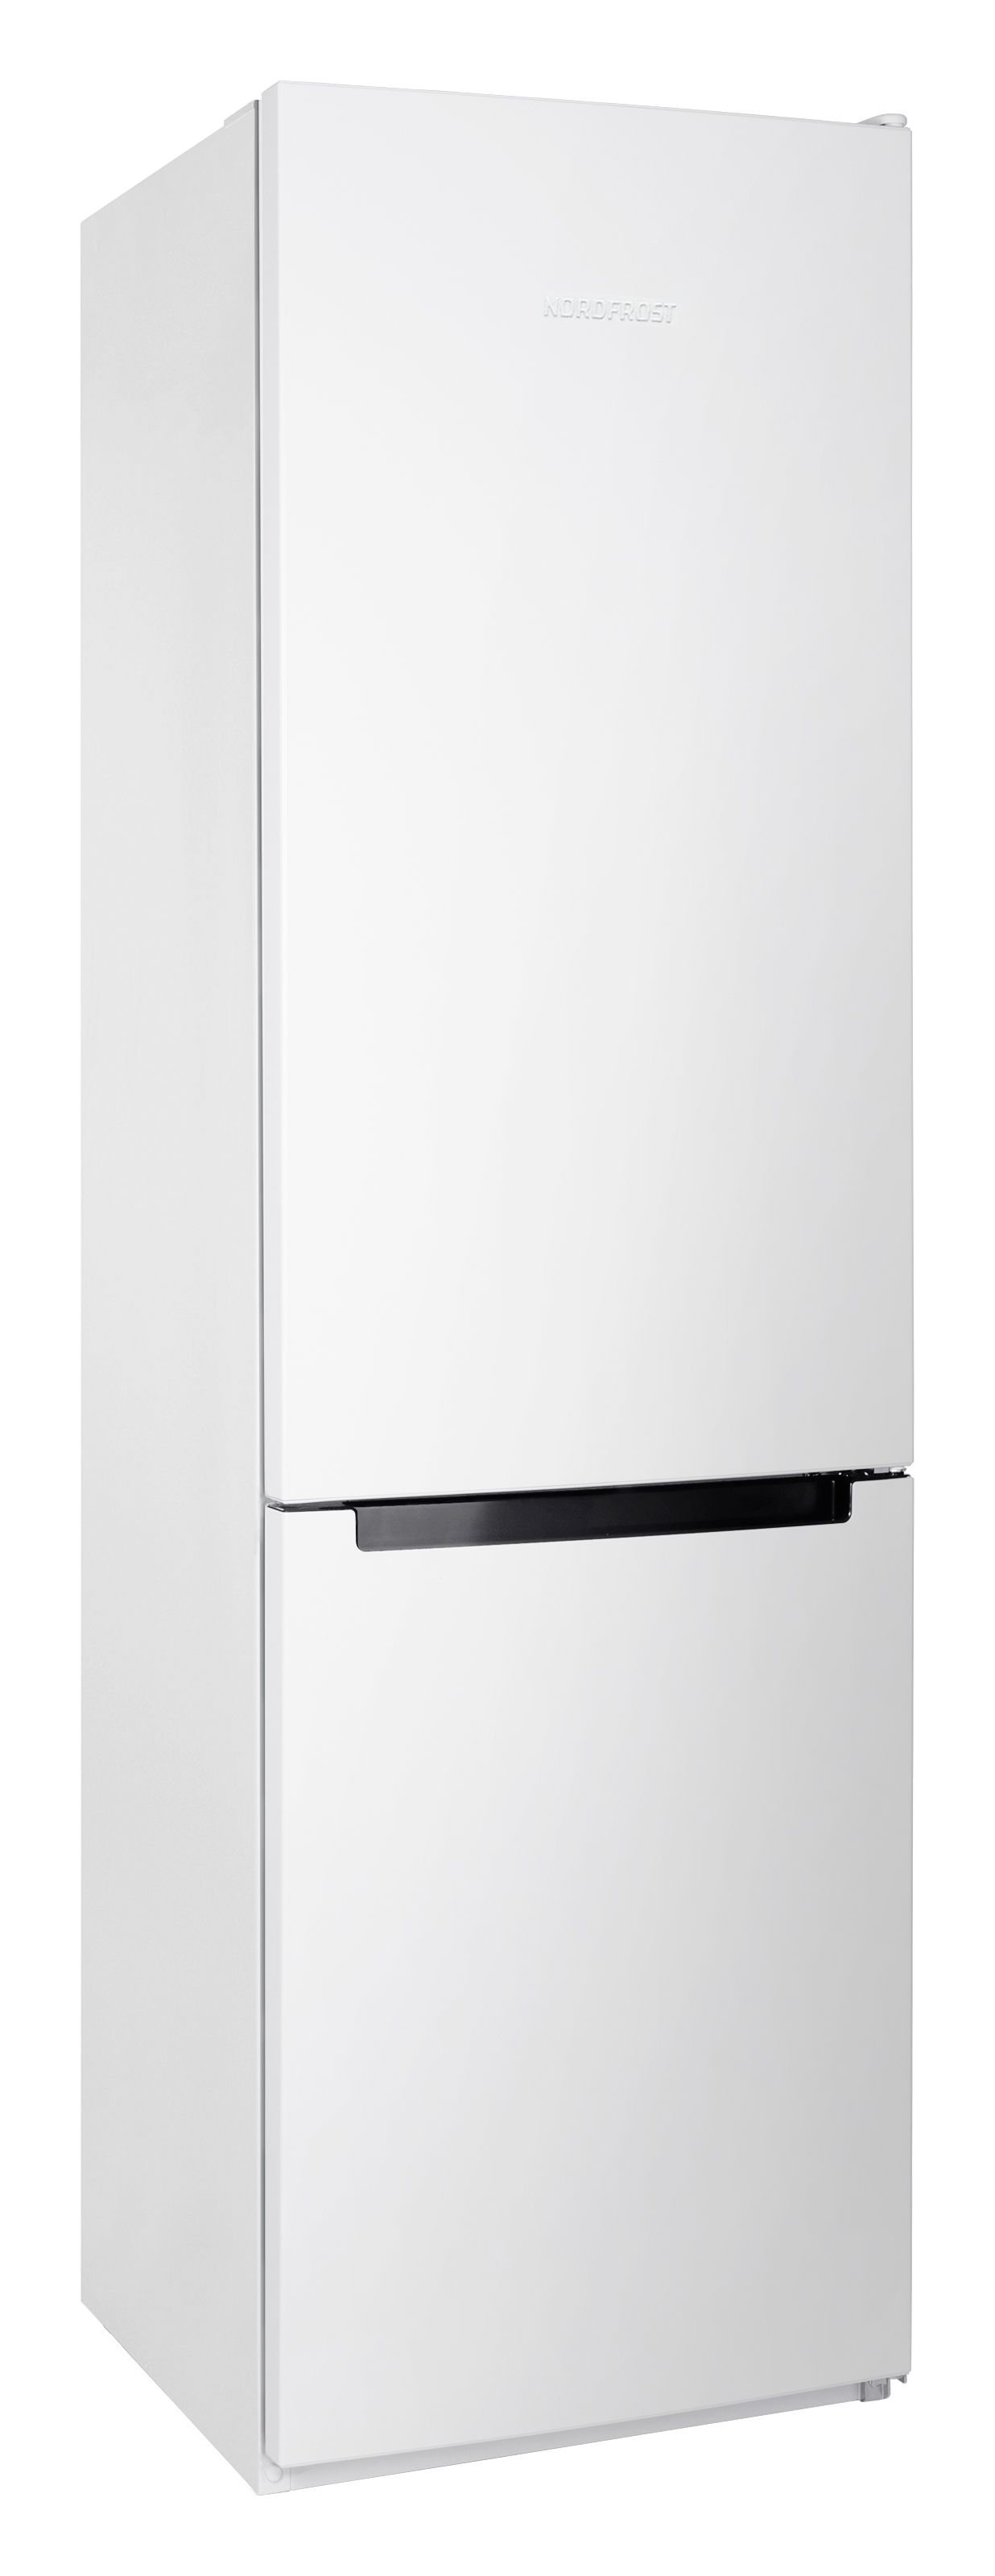 Холодильник NordFrost NRB 154 W белый двухкамерный холодильник nordfrost nrb 122 w